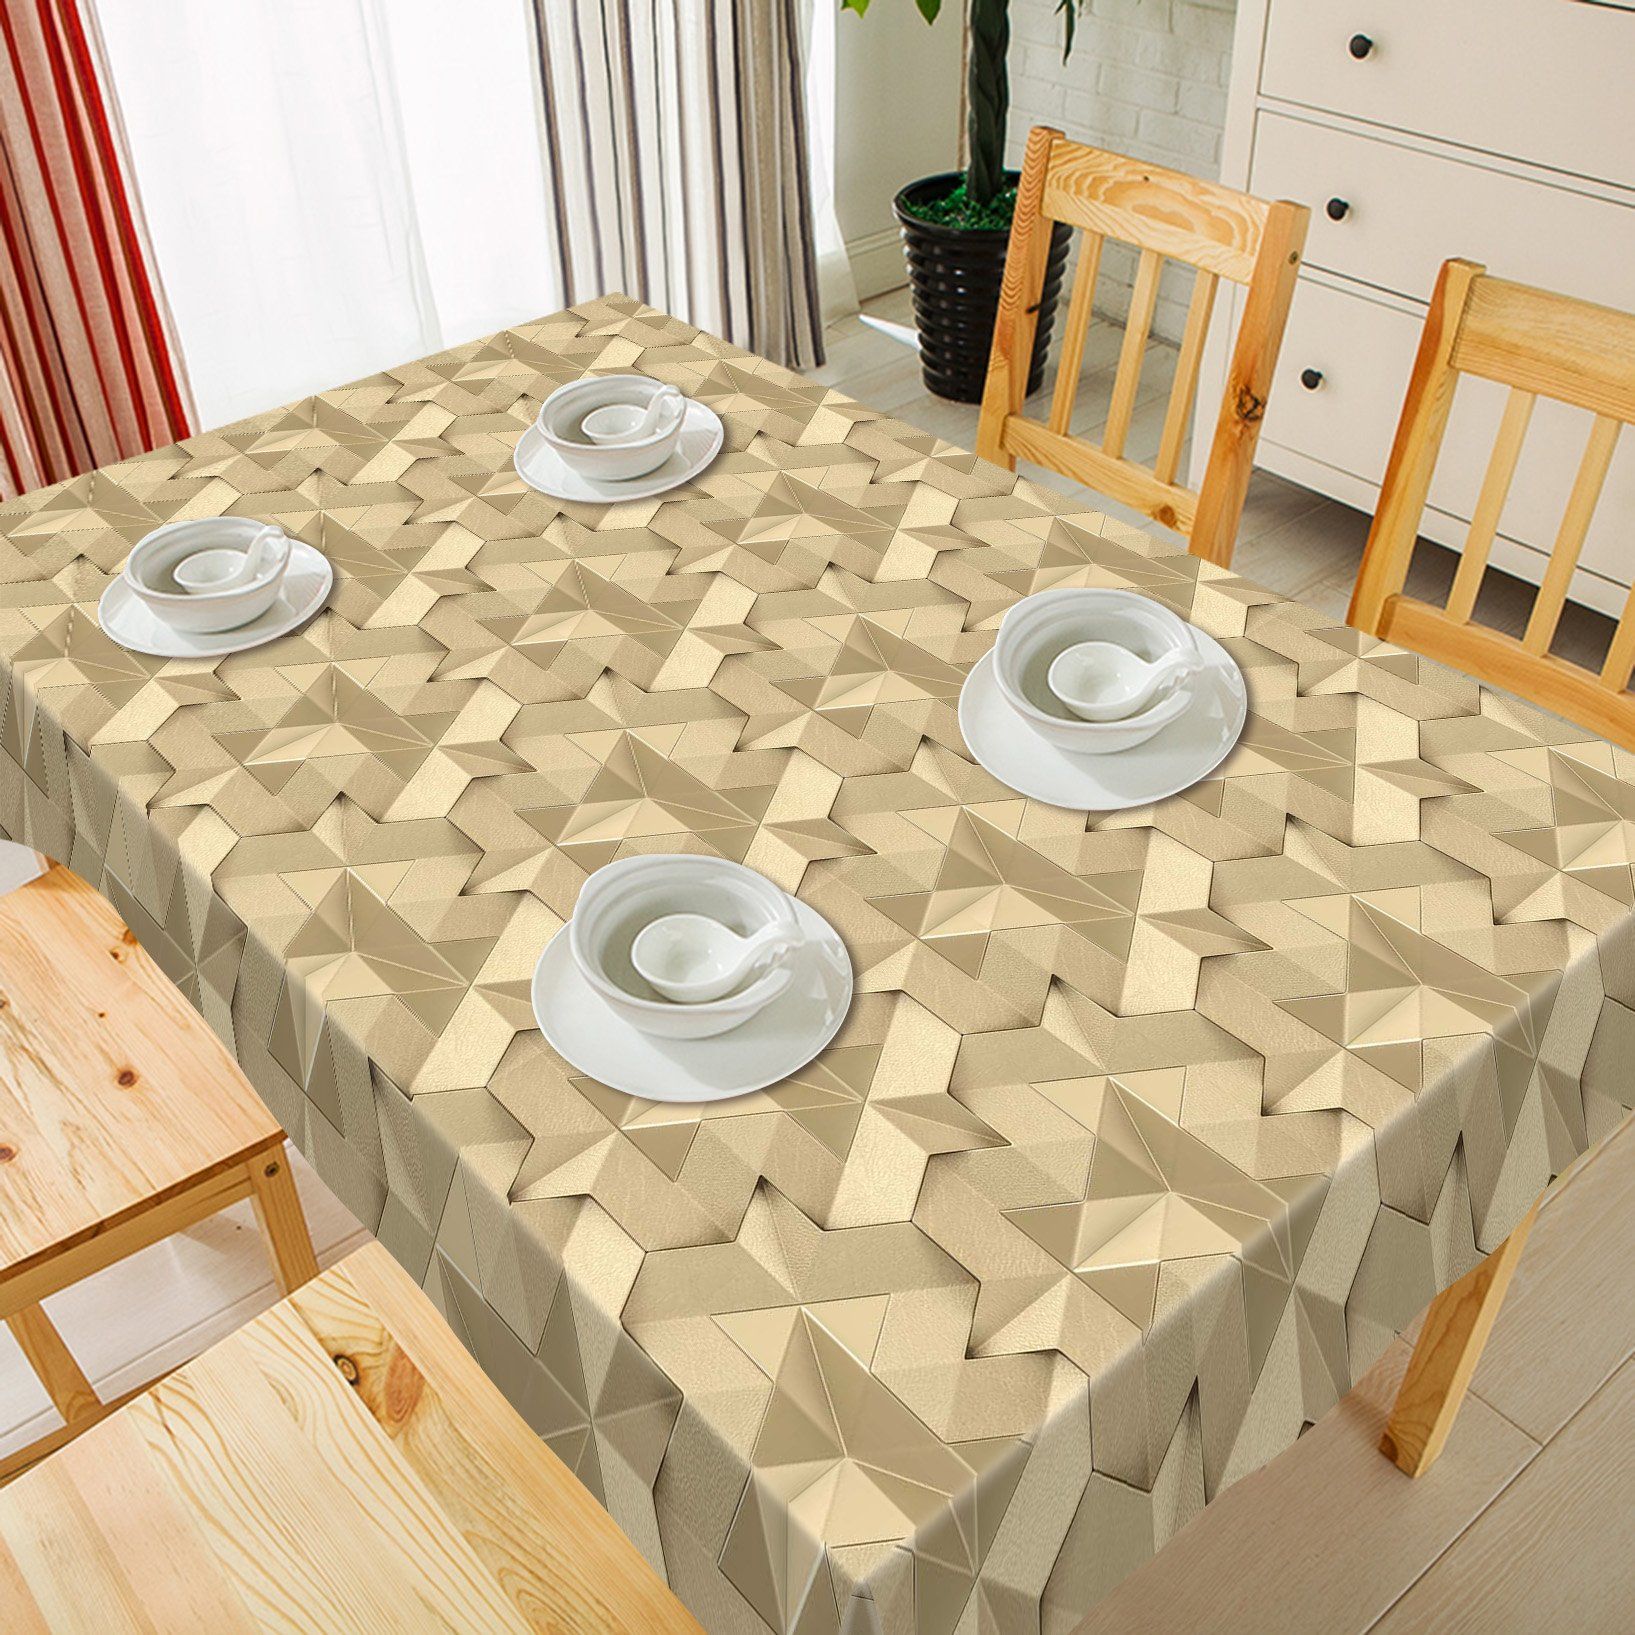 3D Stitching Irregular Patterns 79 Tablecloths Wallpaper AJ Wallpaper 